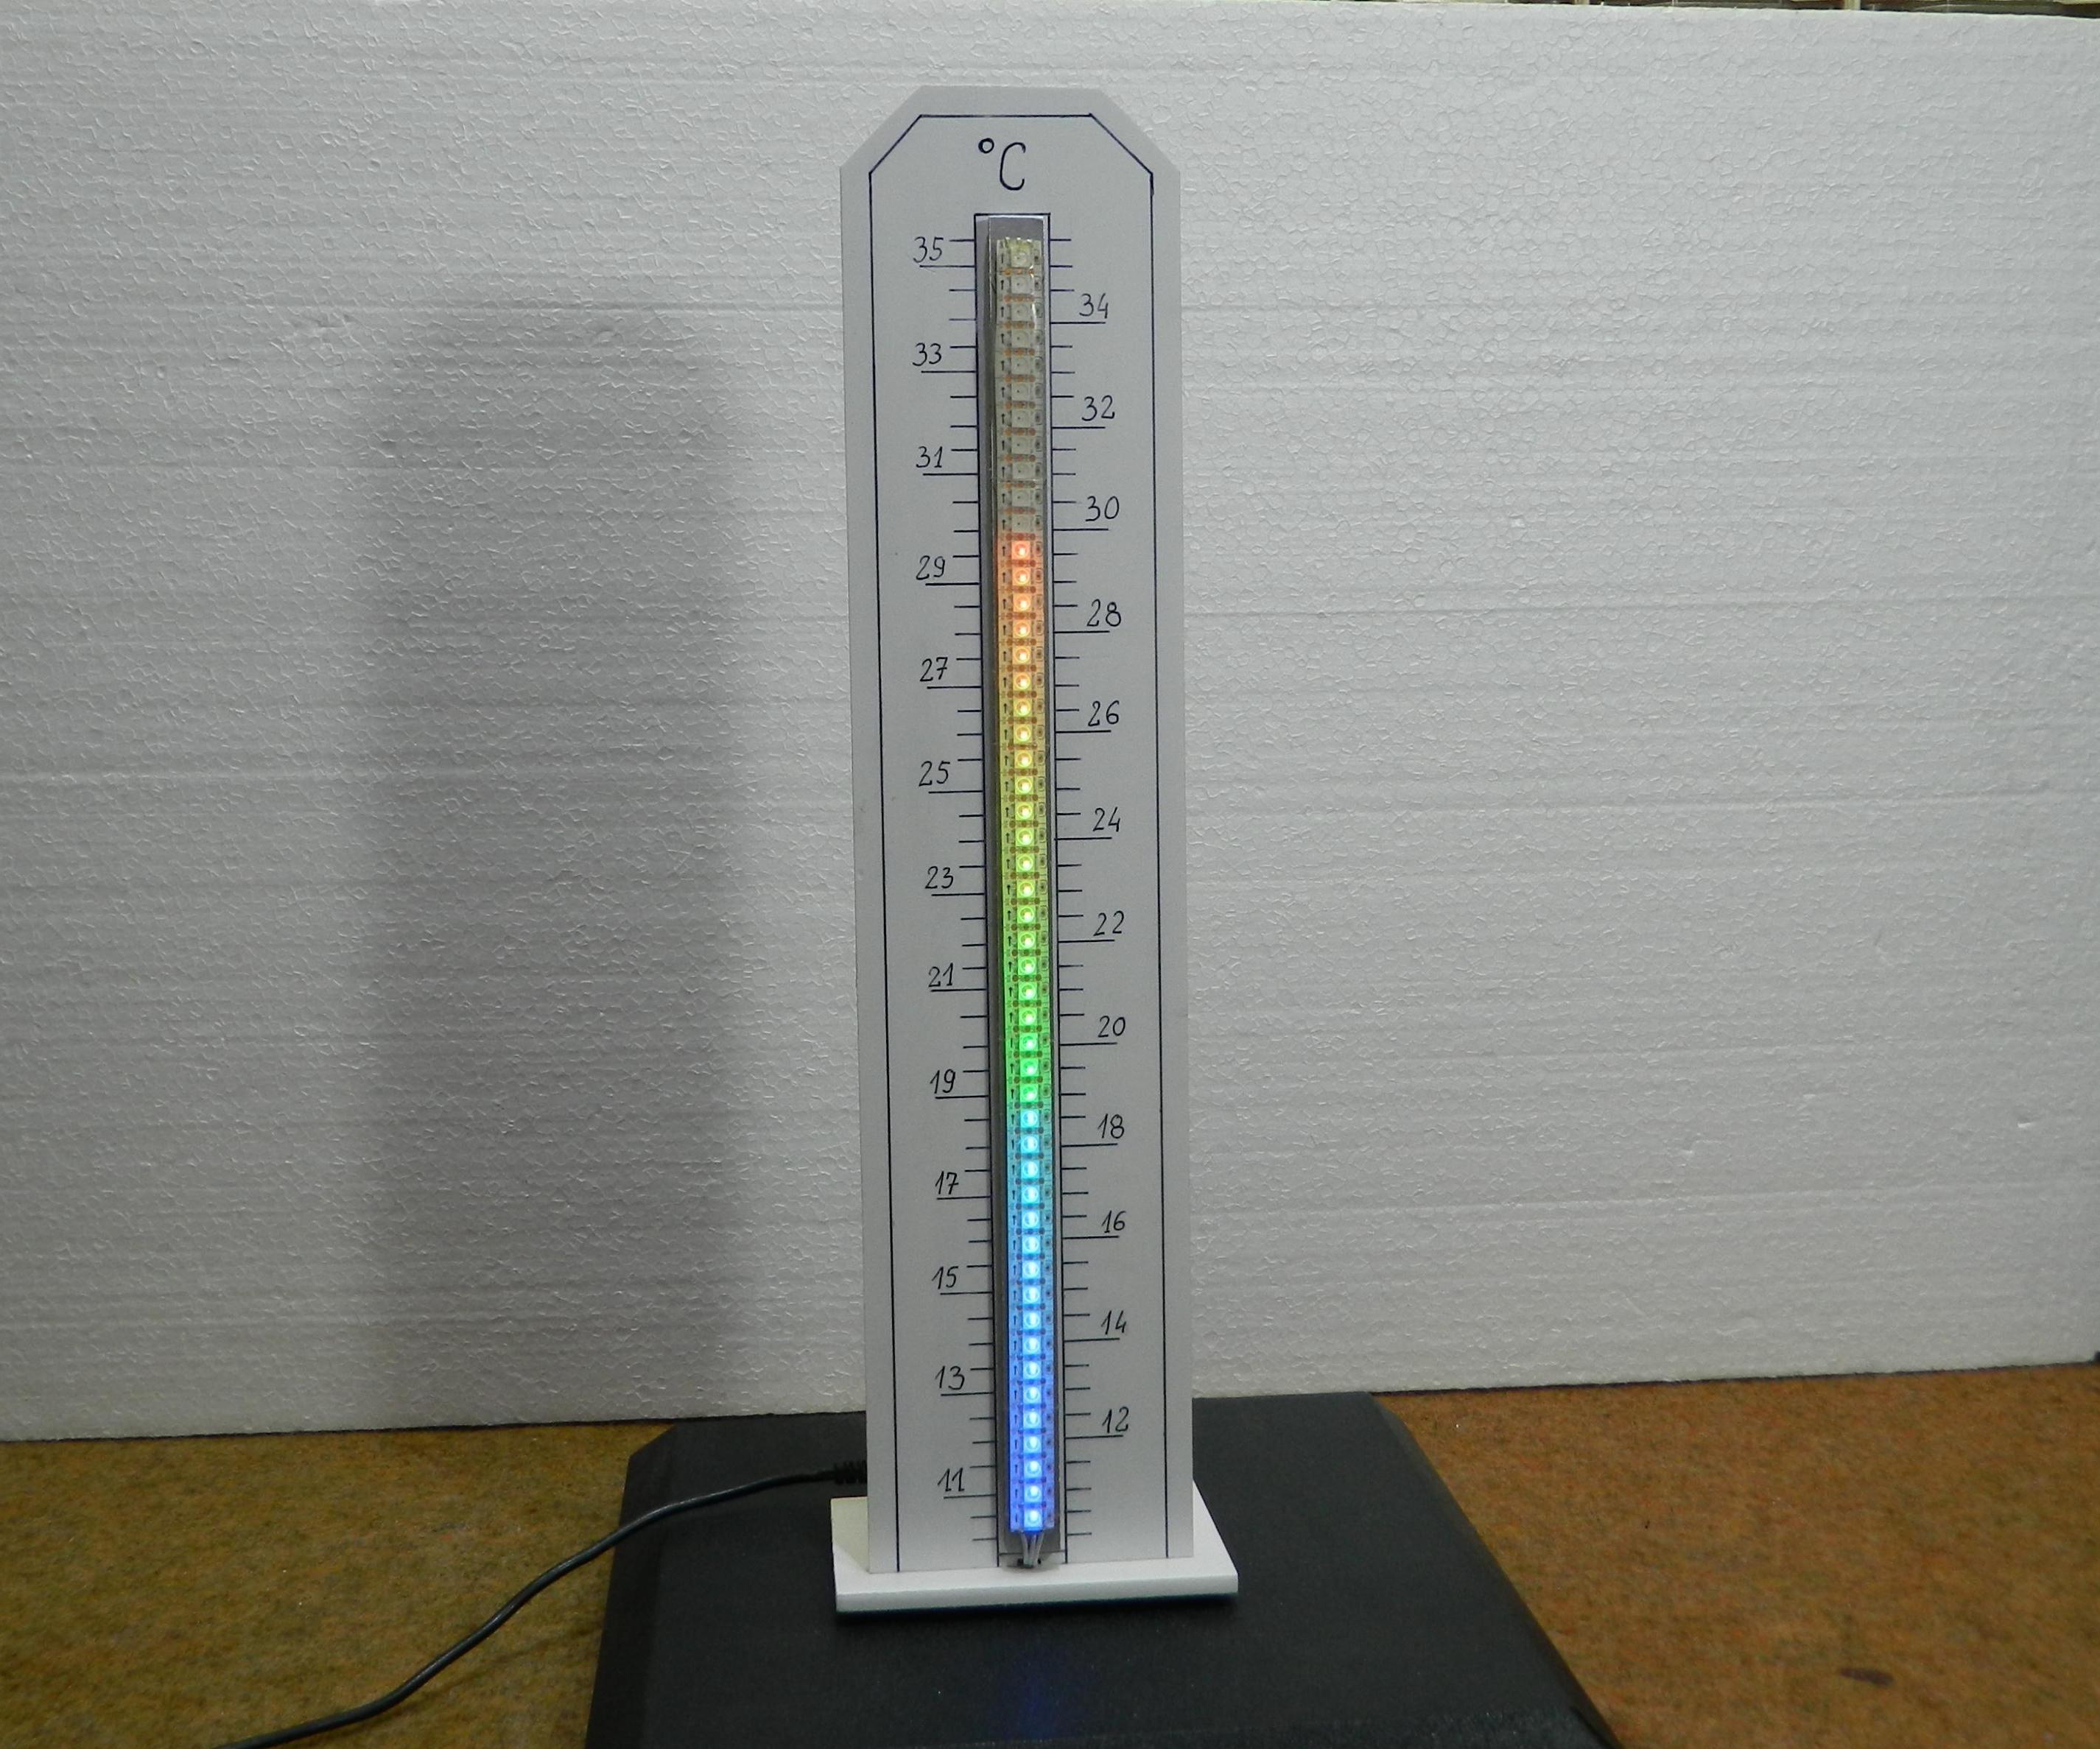 Arduino Room Comfort Thermometer